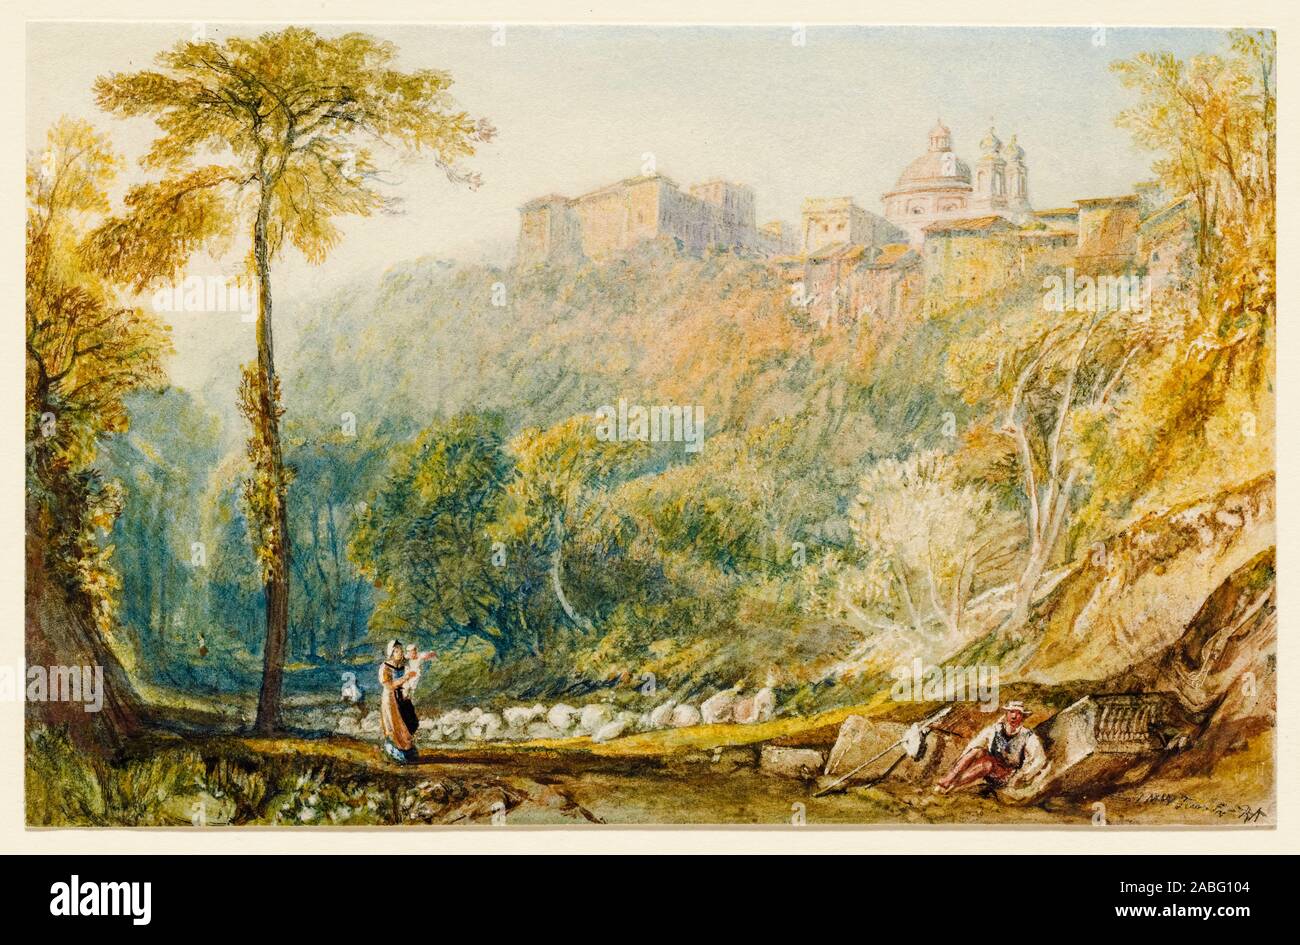 JMW Turner, View of La Riccia, (Ariccia), landscape painting, 1817 Stock Photo